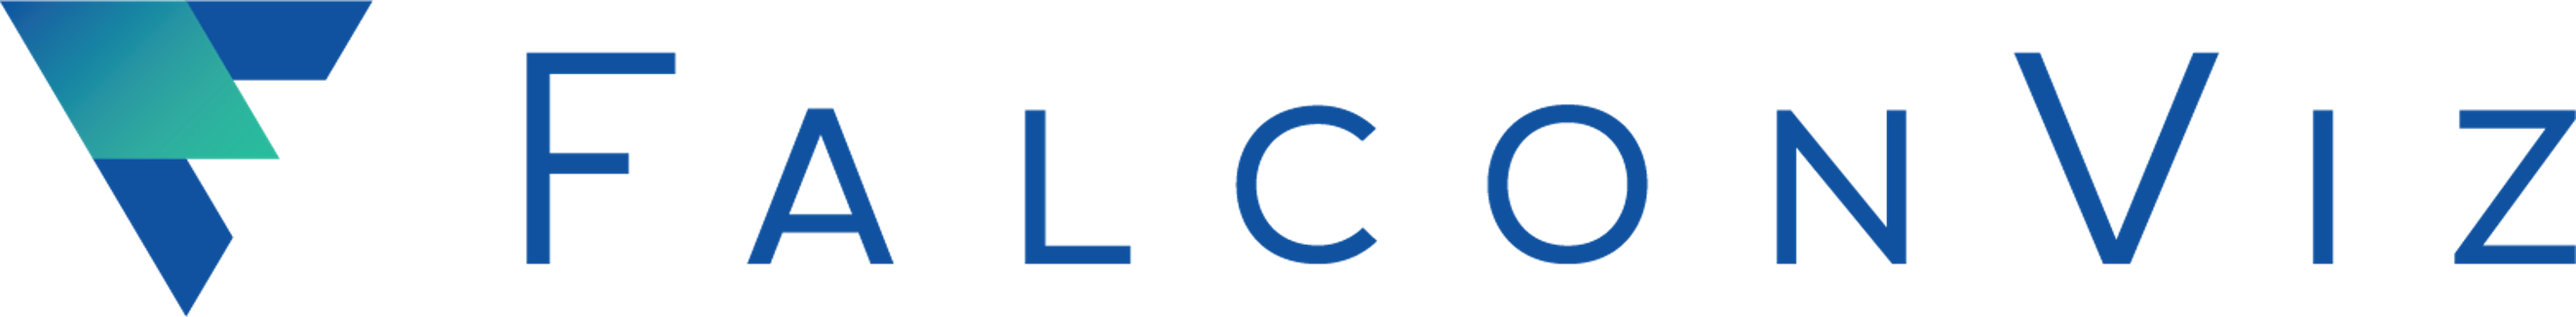 falconviz logo